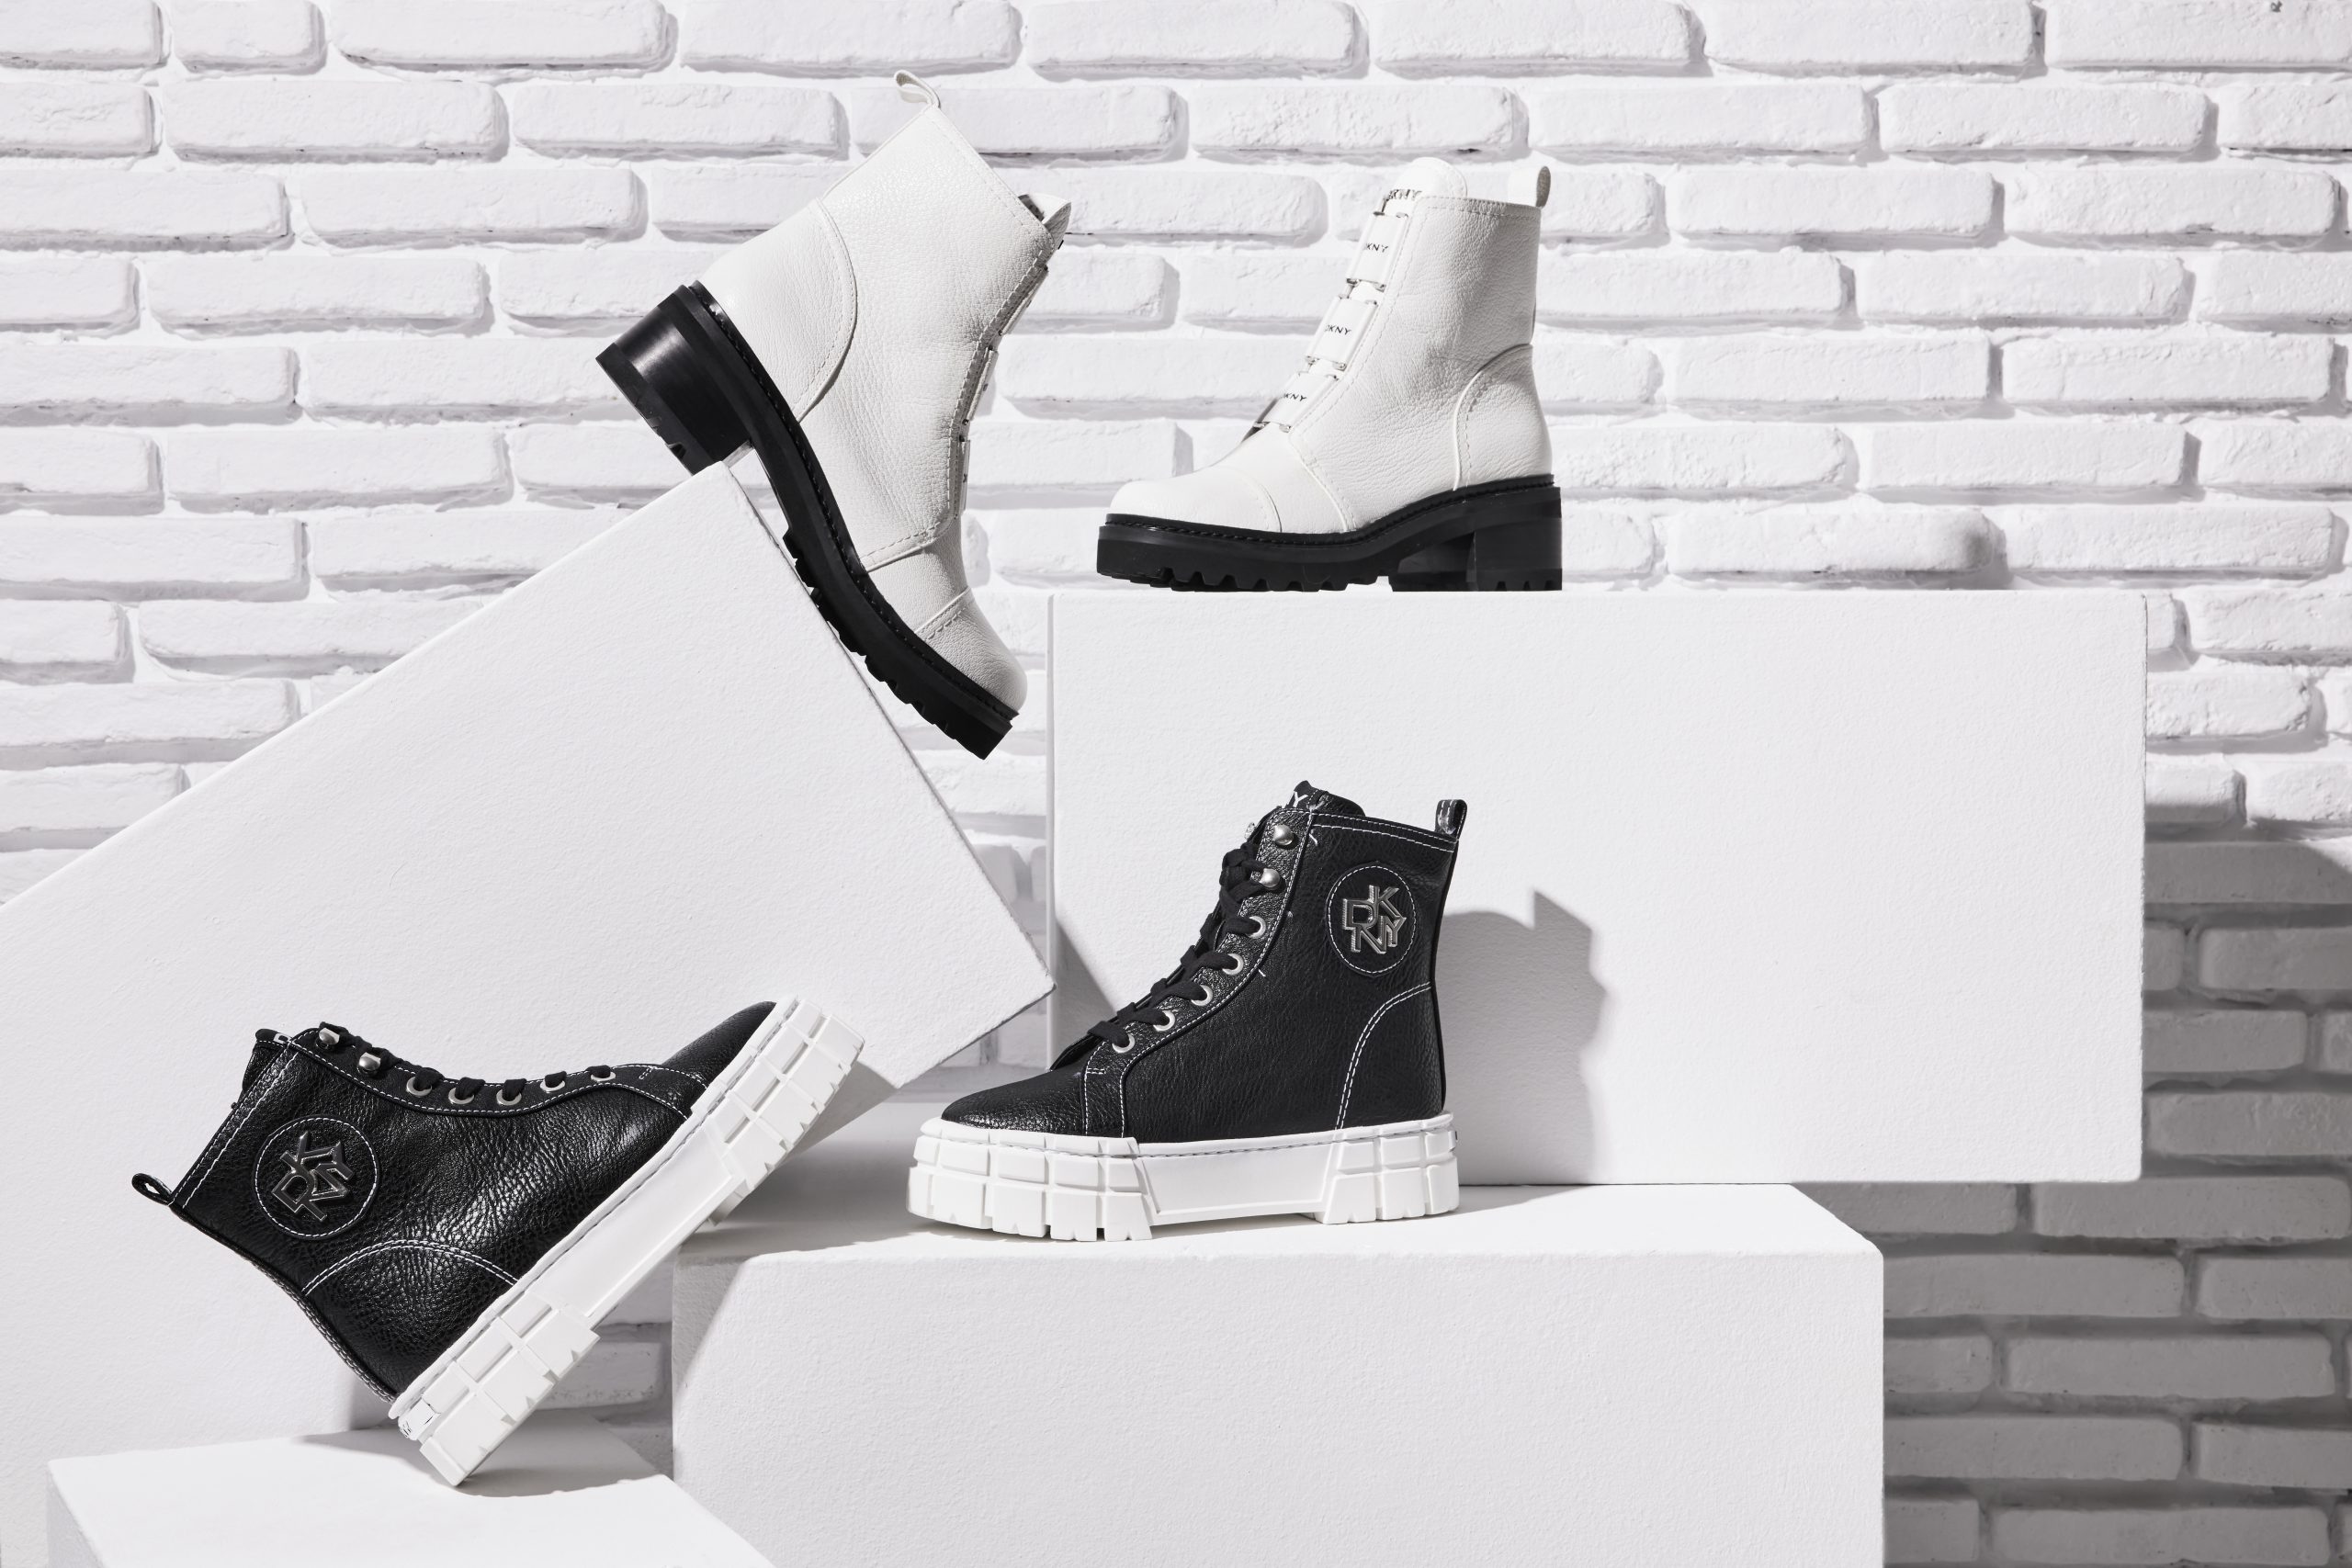 H DKNY παρουσιάζει τις πιο hot τάσεις στα παπούτσια της σεζόν